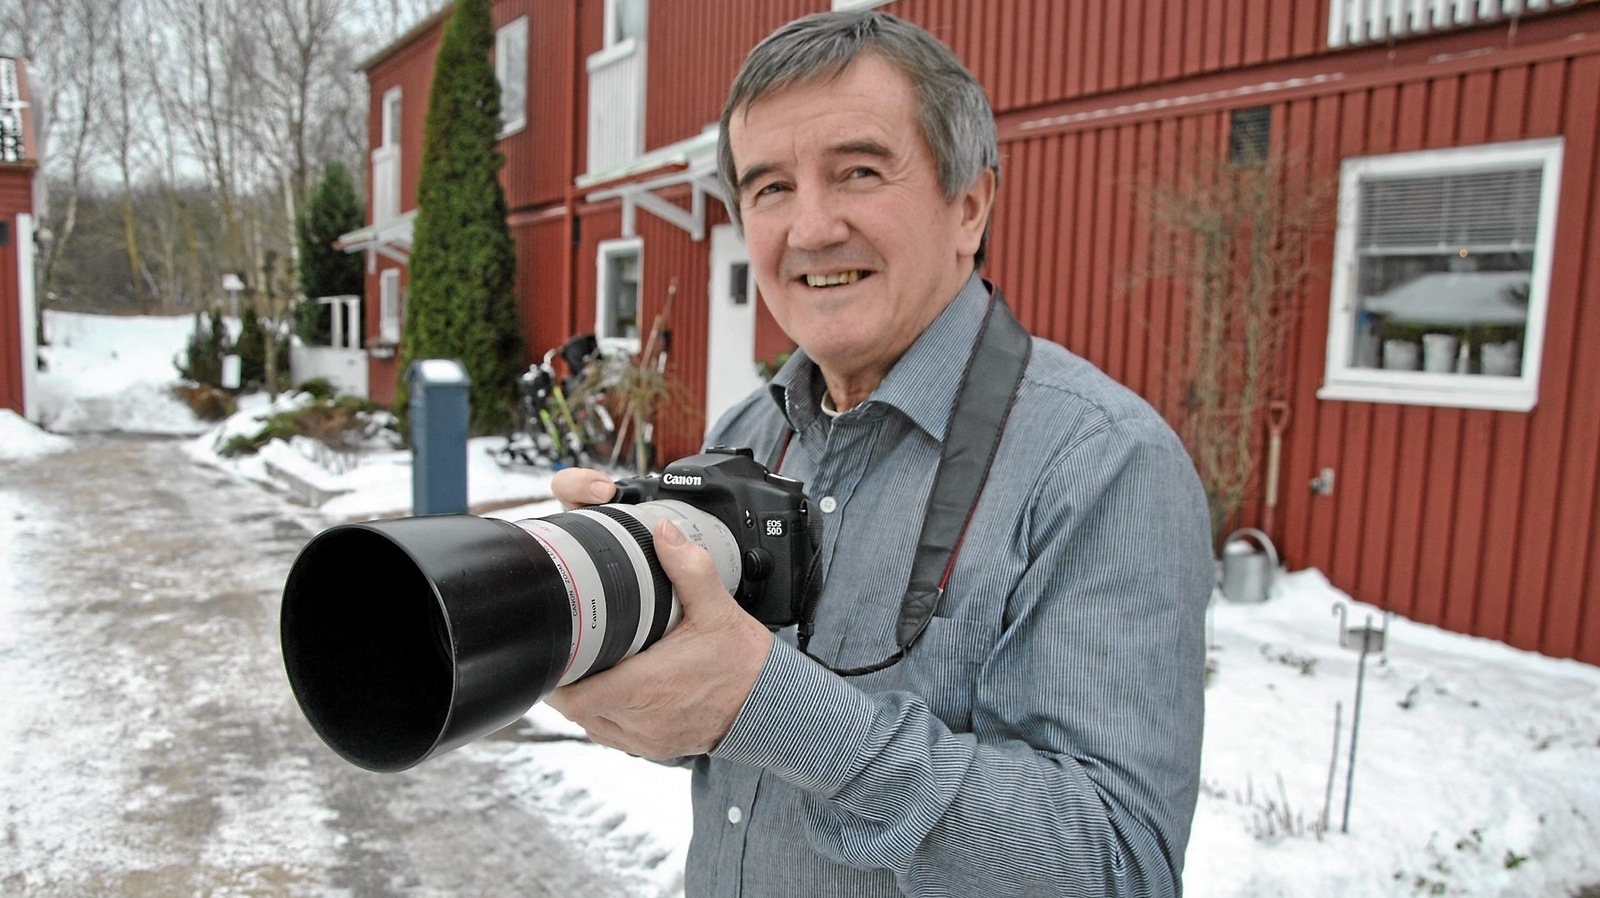 Naturfotografen Karlo Pesjak, Hässleholm, har avlidit efter en tids sjukdom.                                                  
Foto: Katarina Bexell